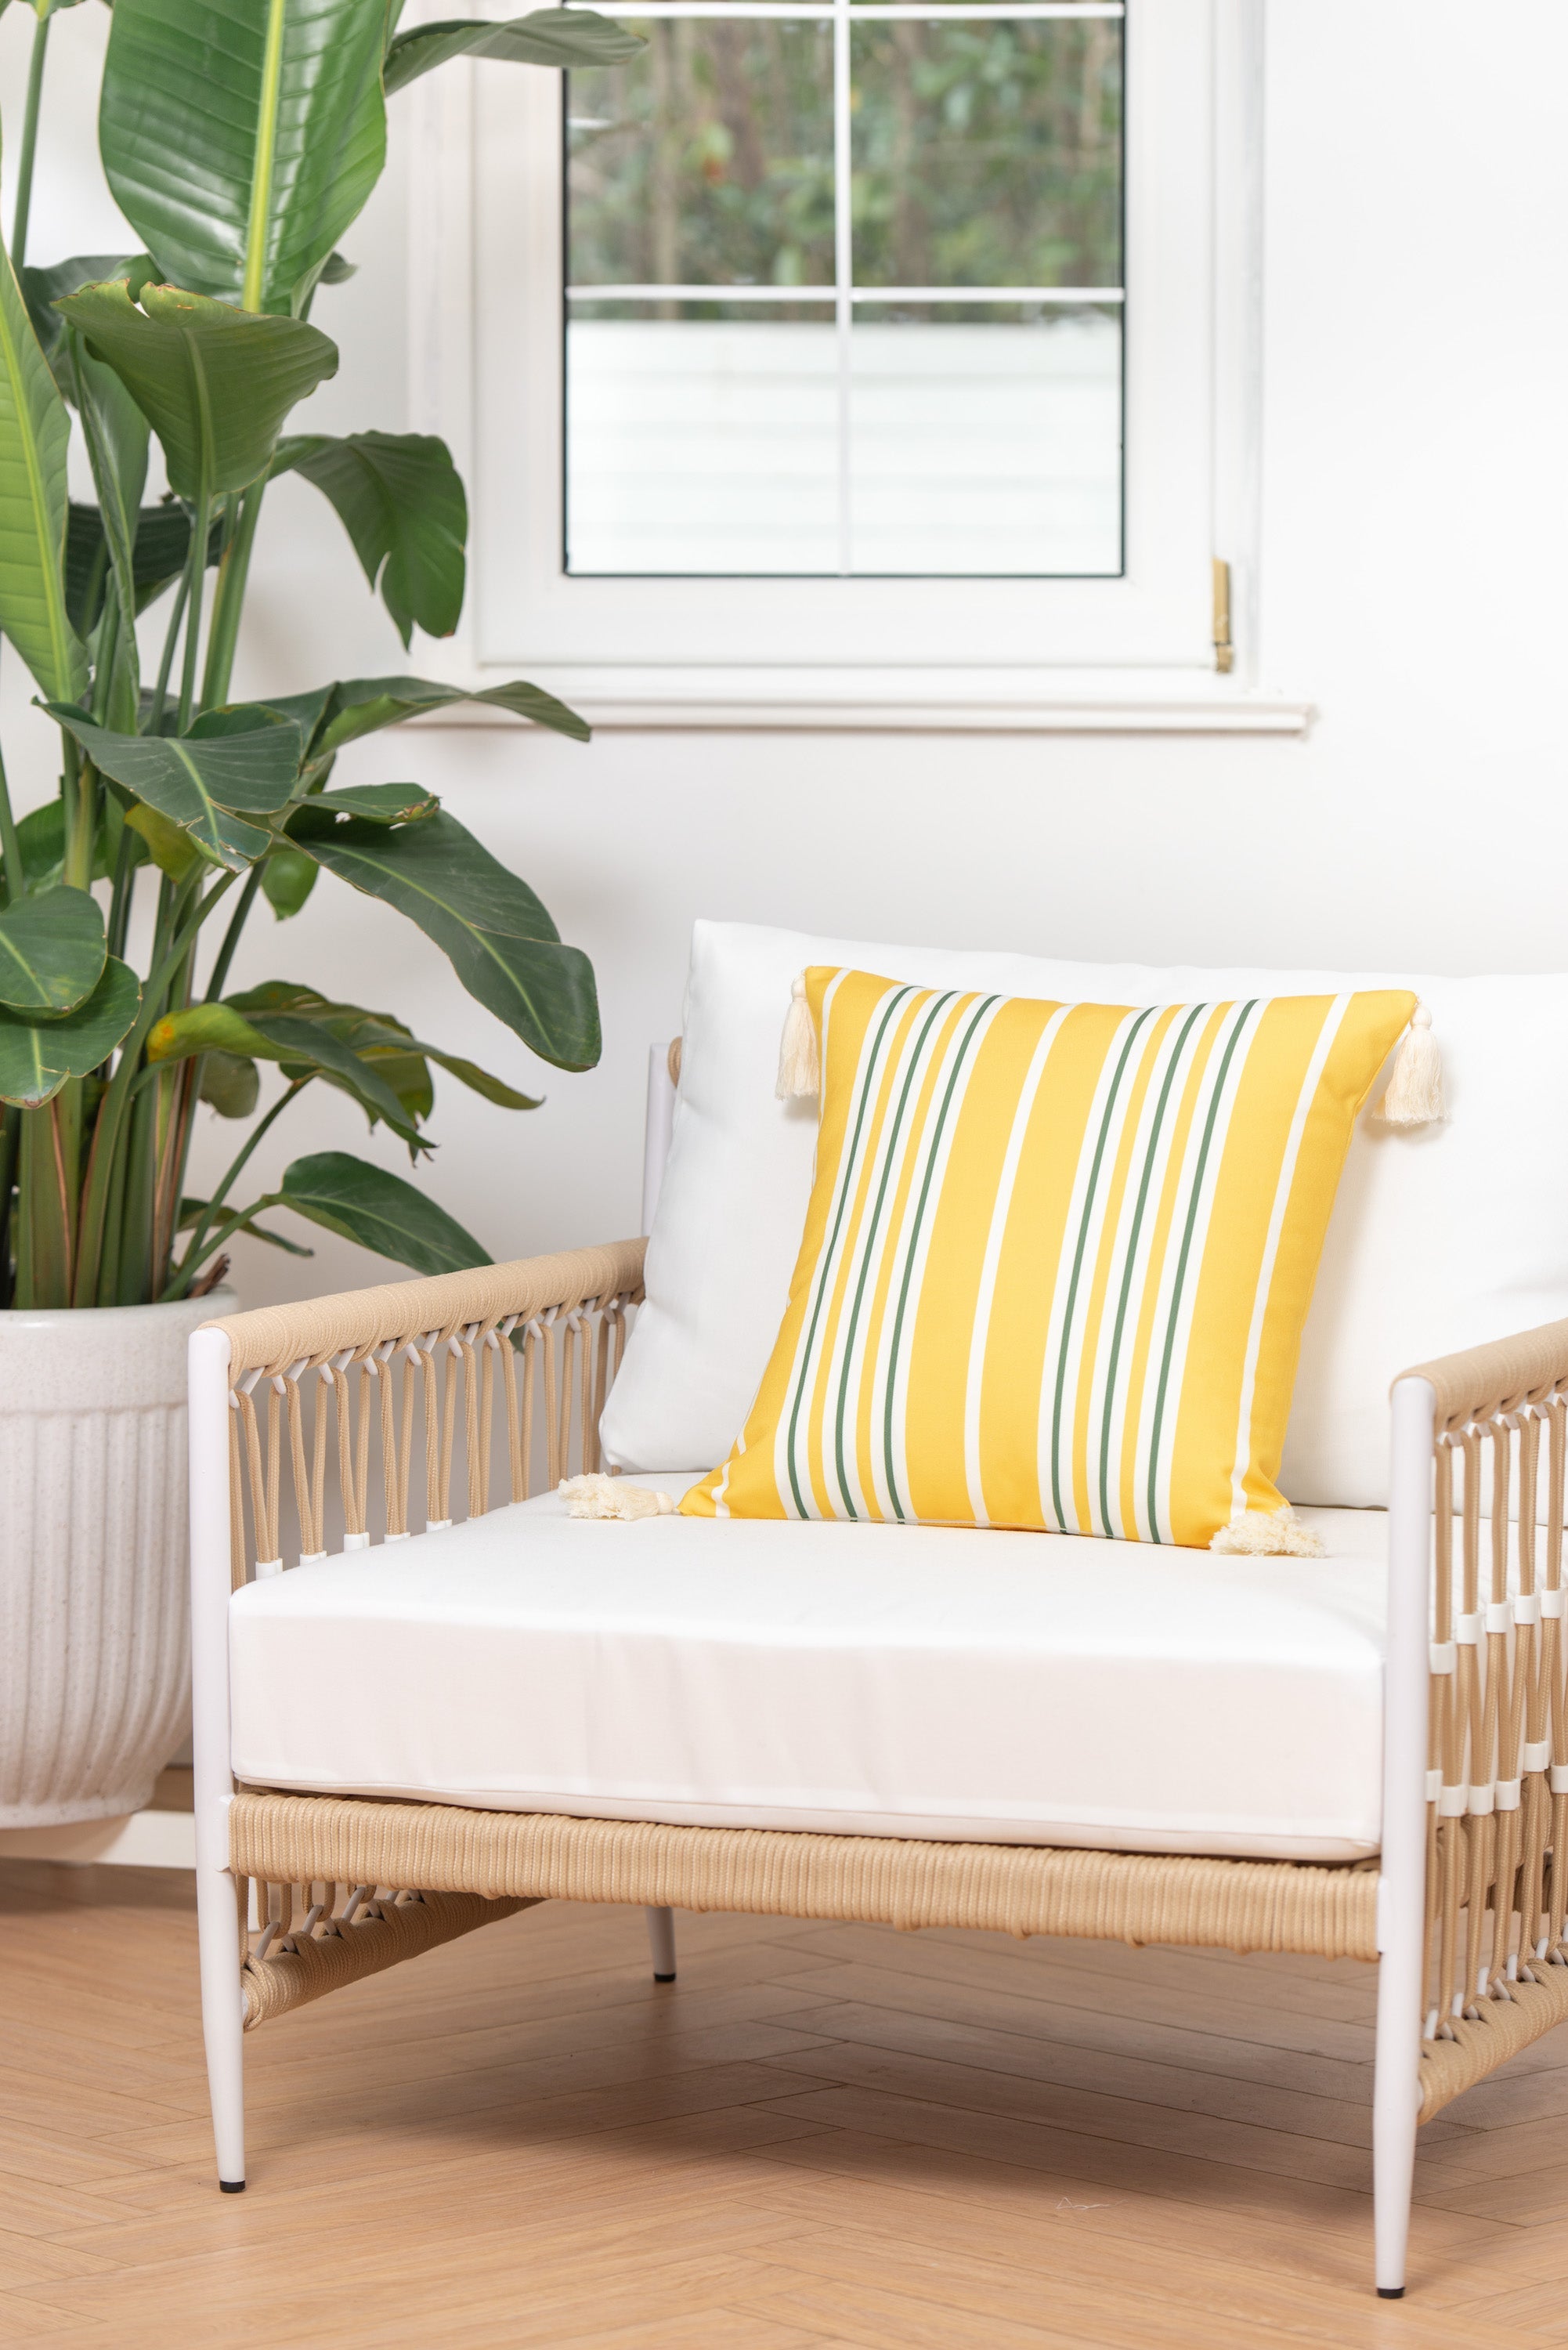 Coastal Indoor Outdoor Throw Pillow Cover, Stripe Tassel, Pale Yellow Green, 18"x18"